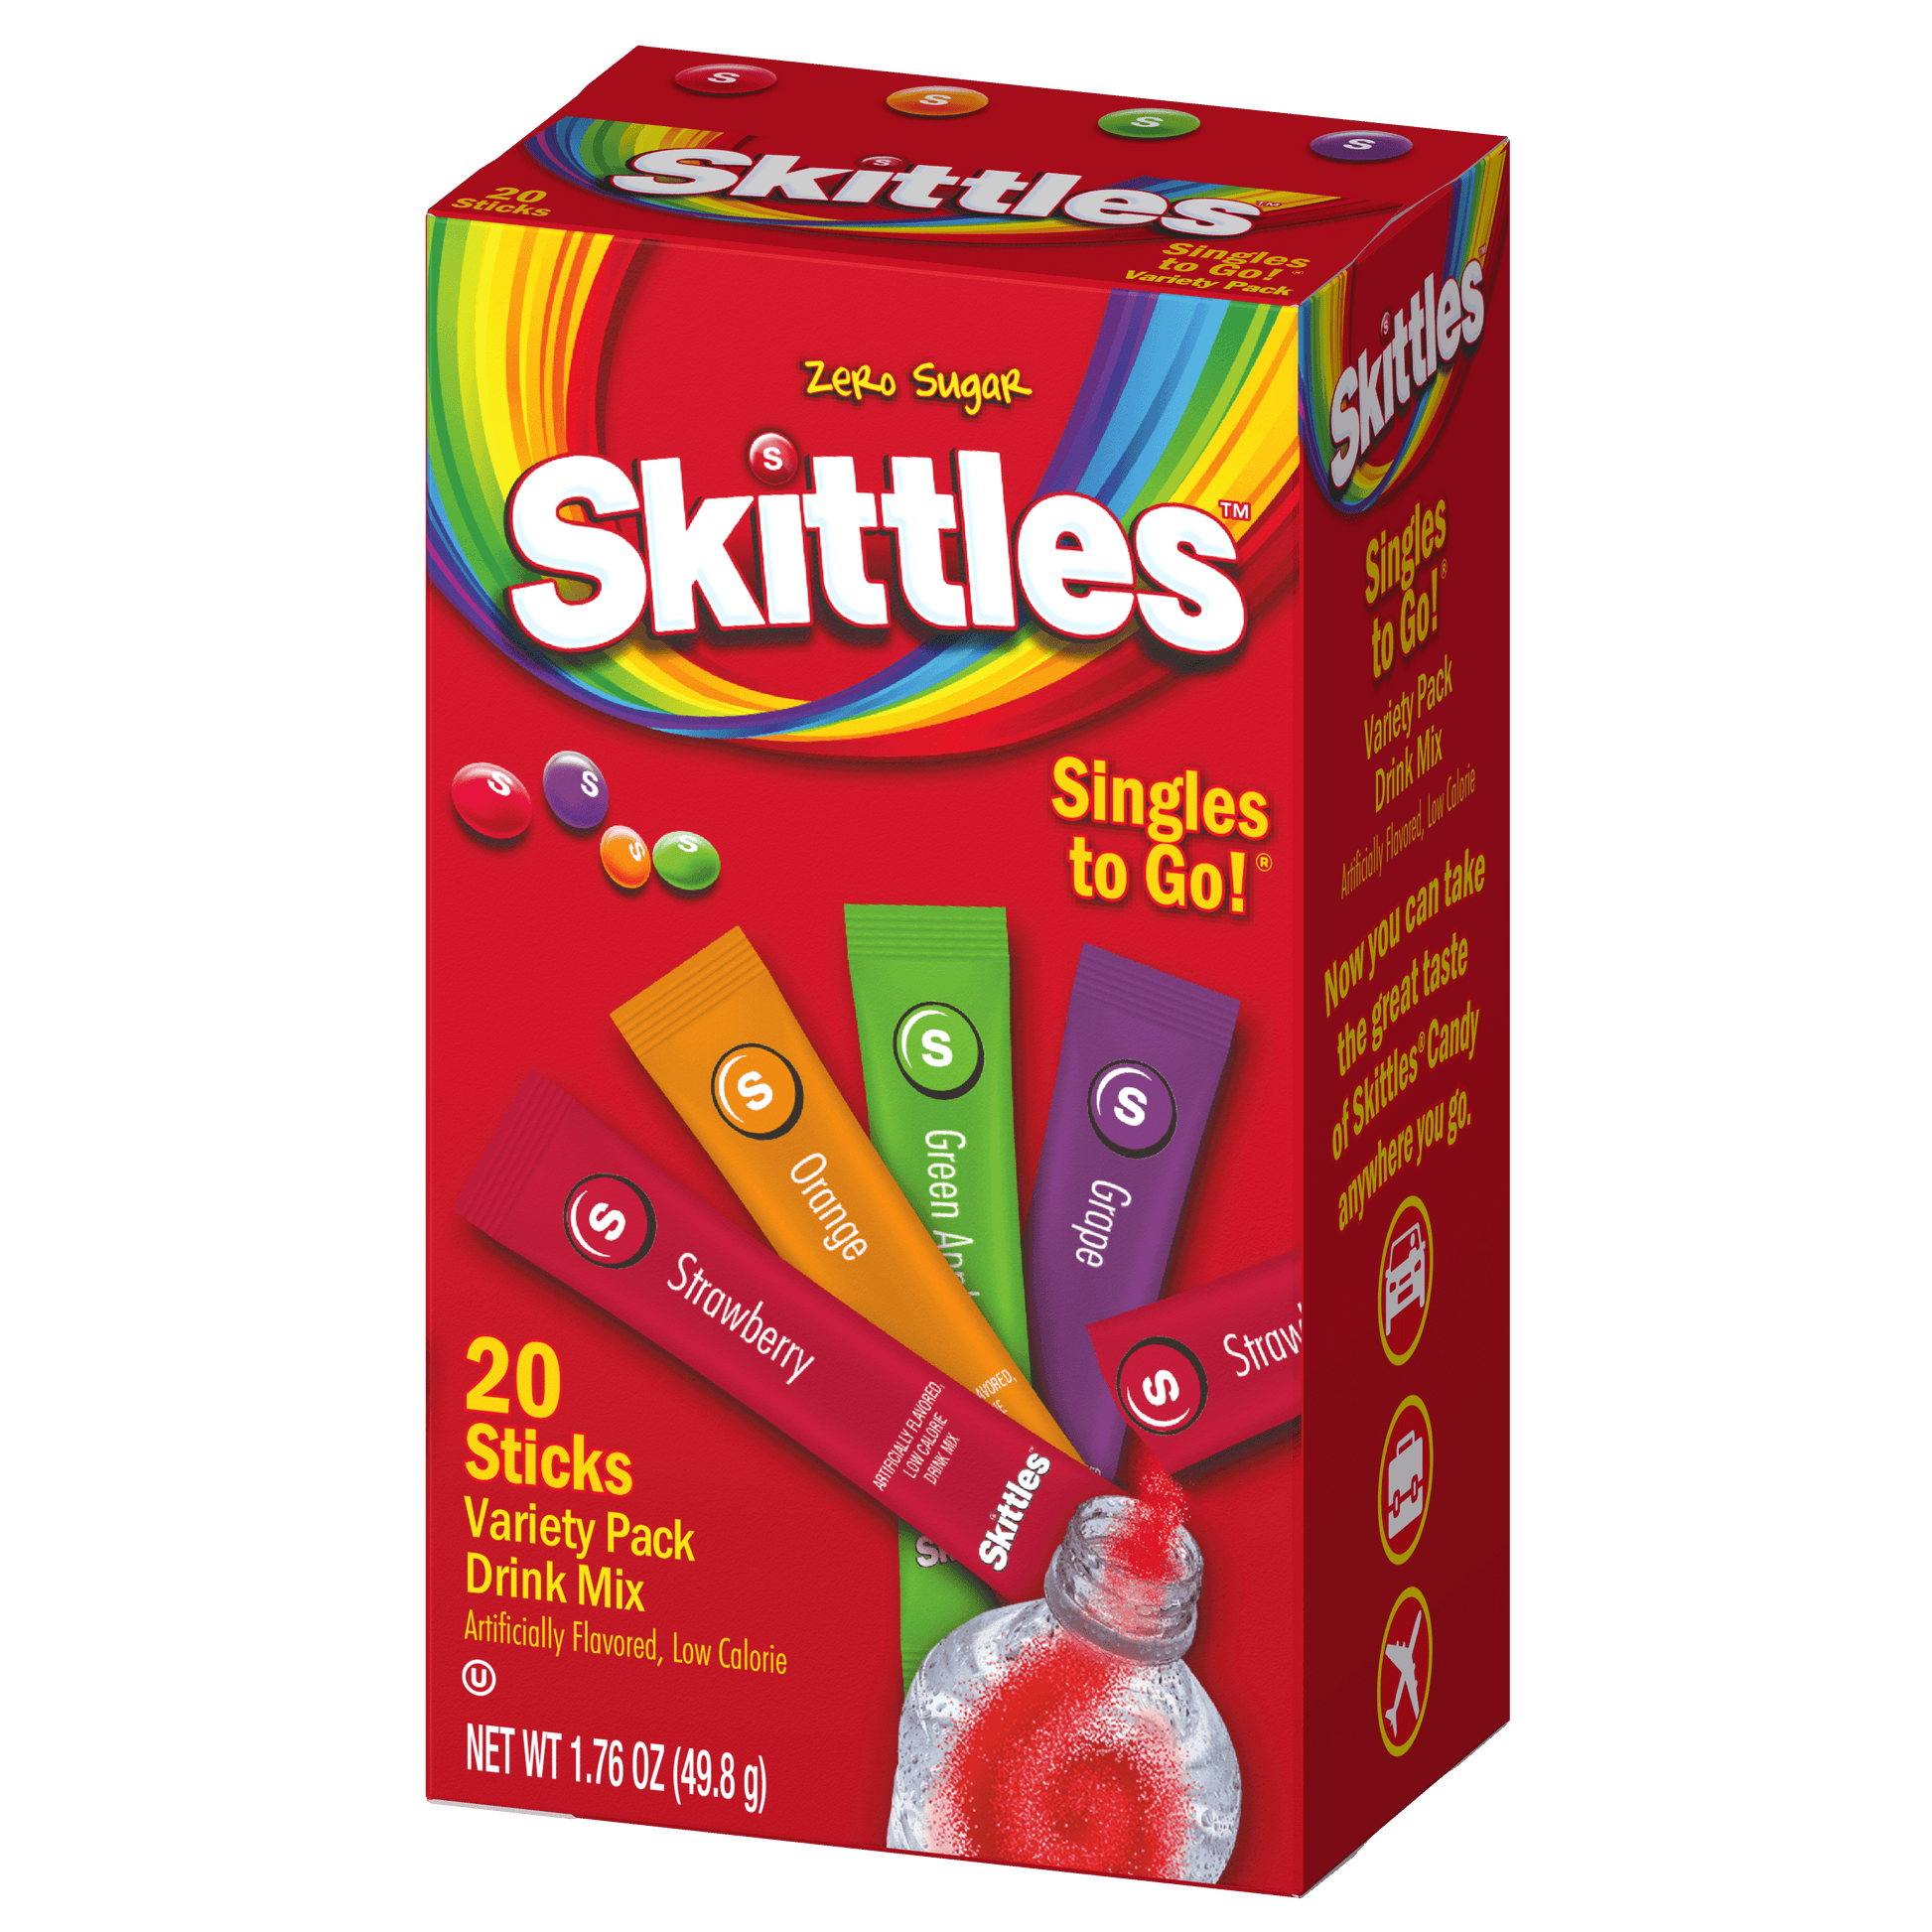 Skittles original flavor s20 count singles to go packaging